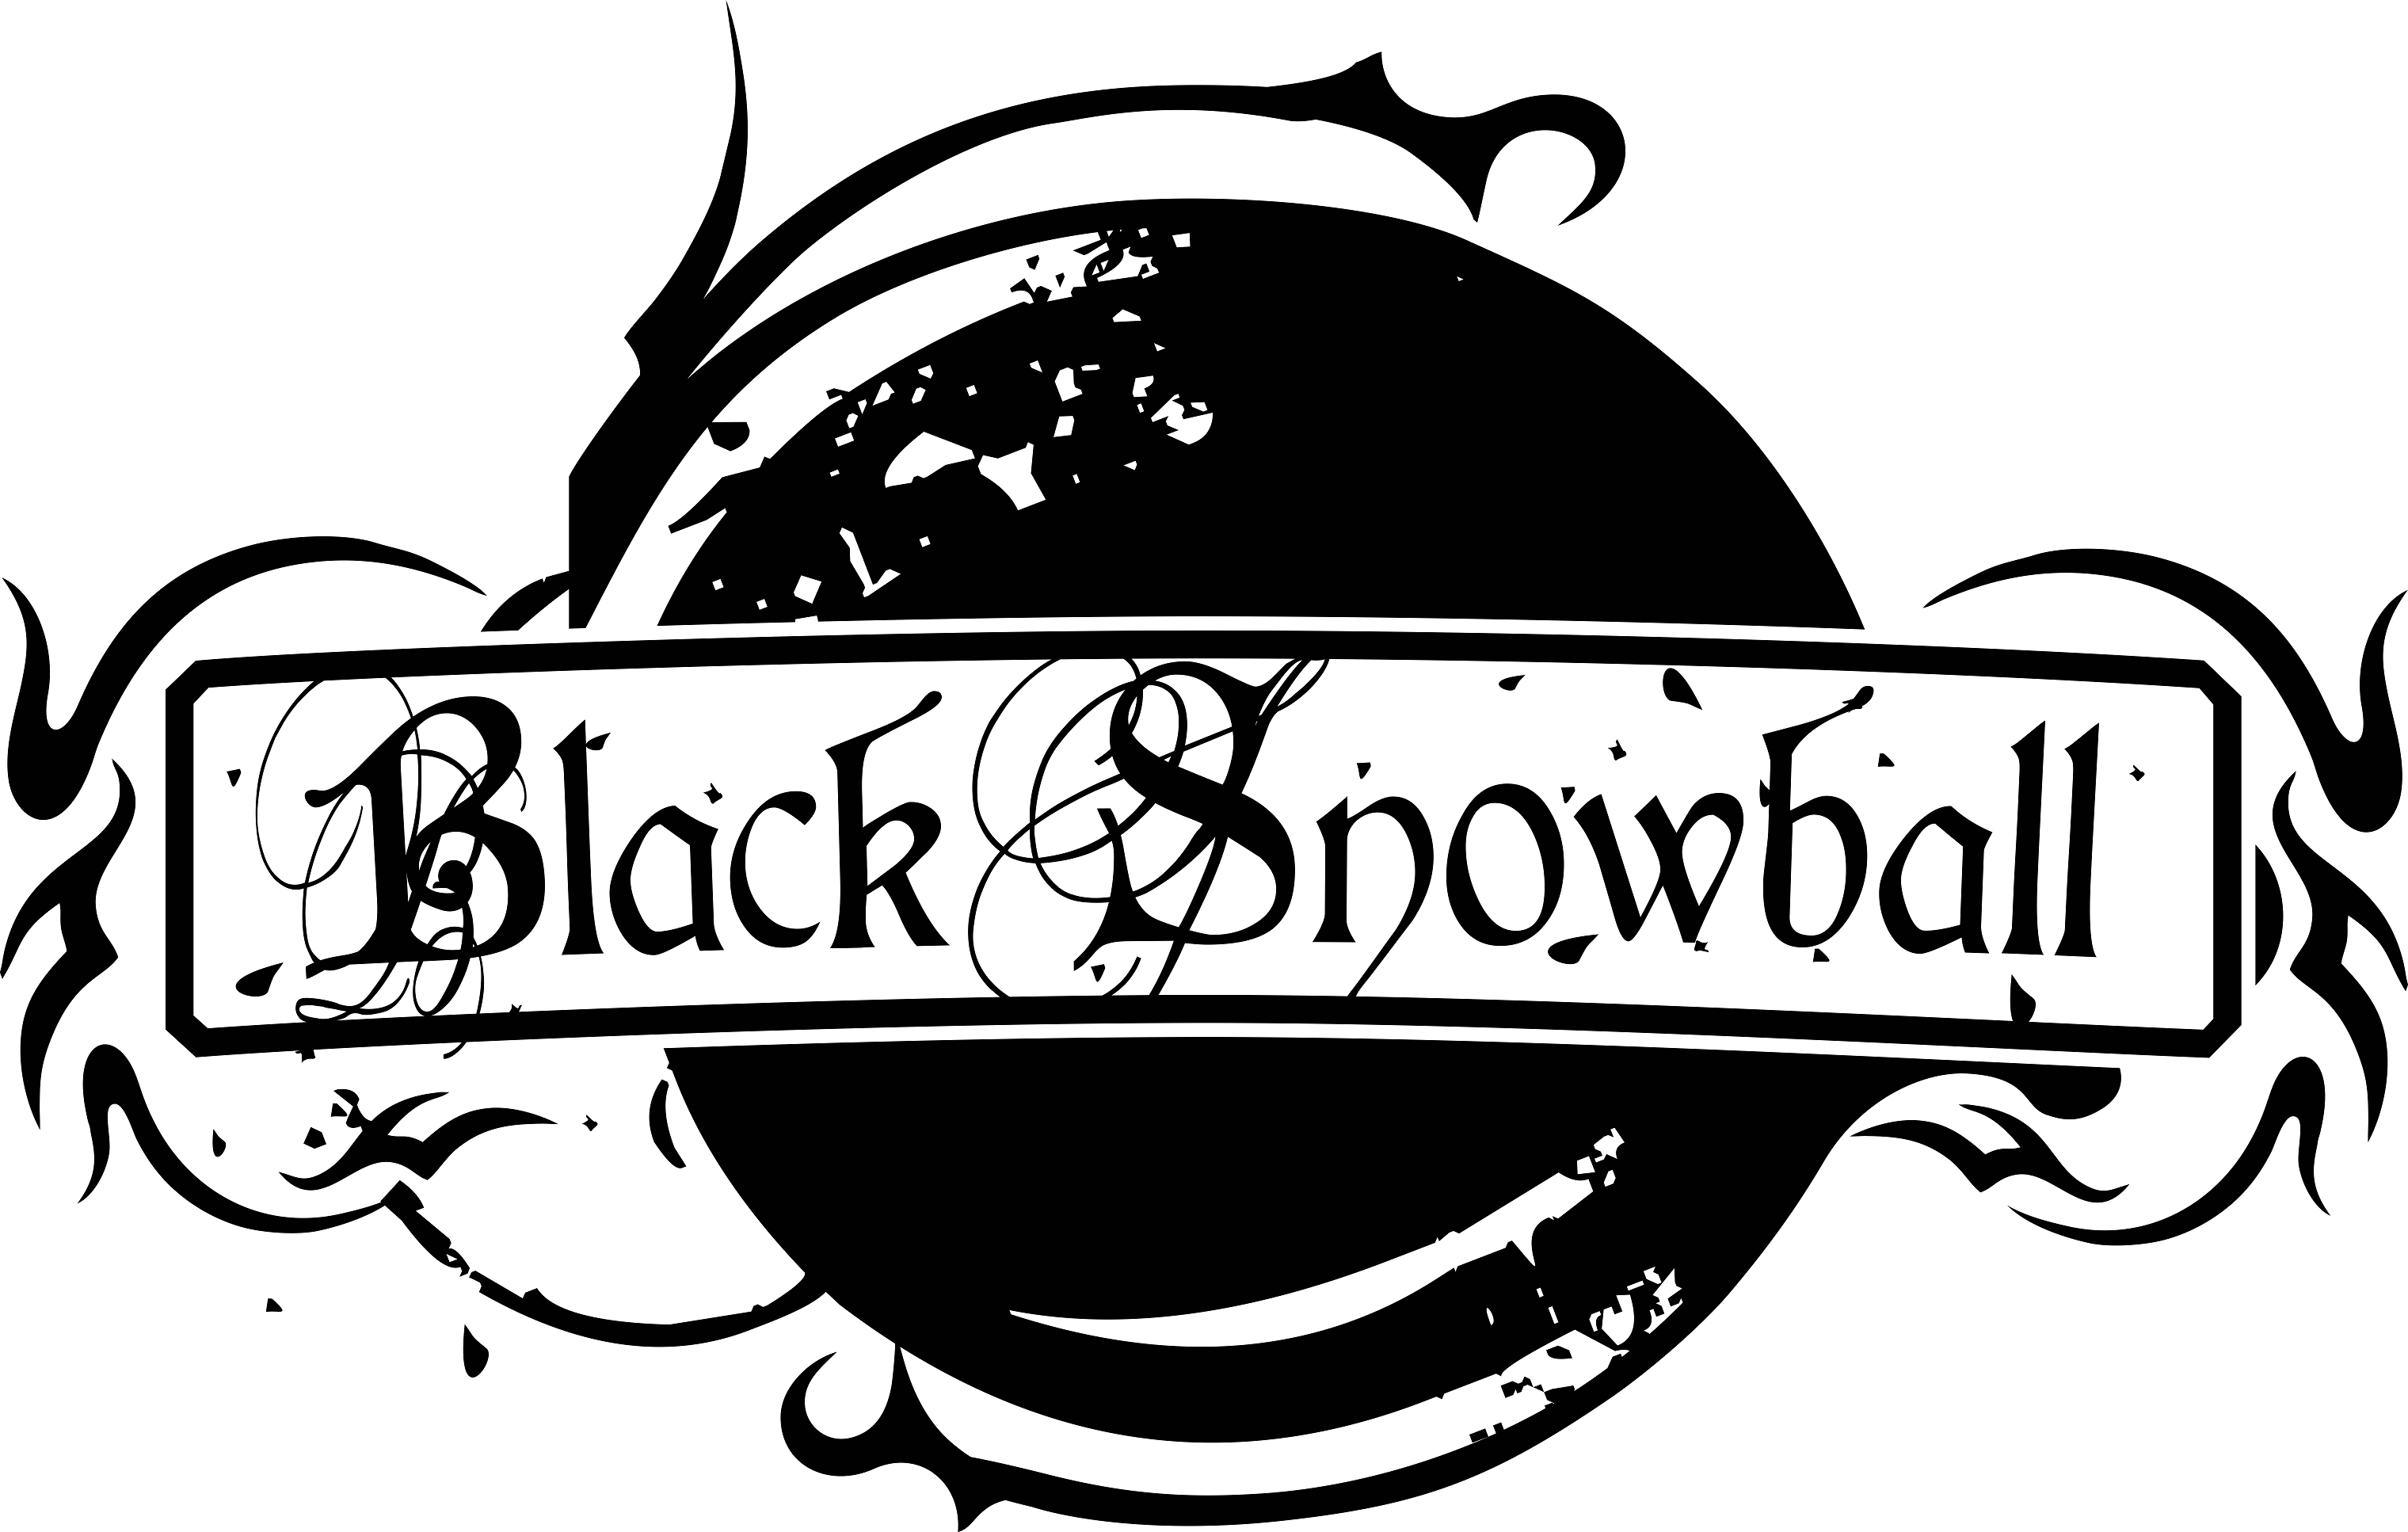 Black Snowball